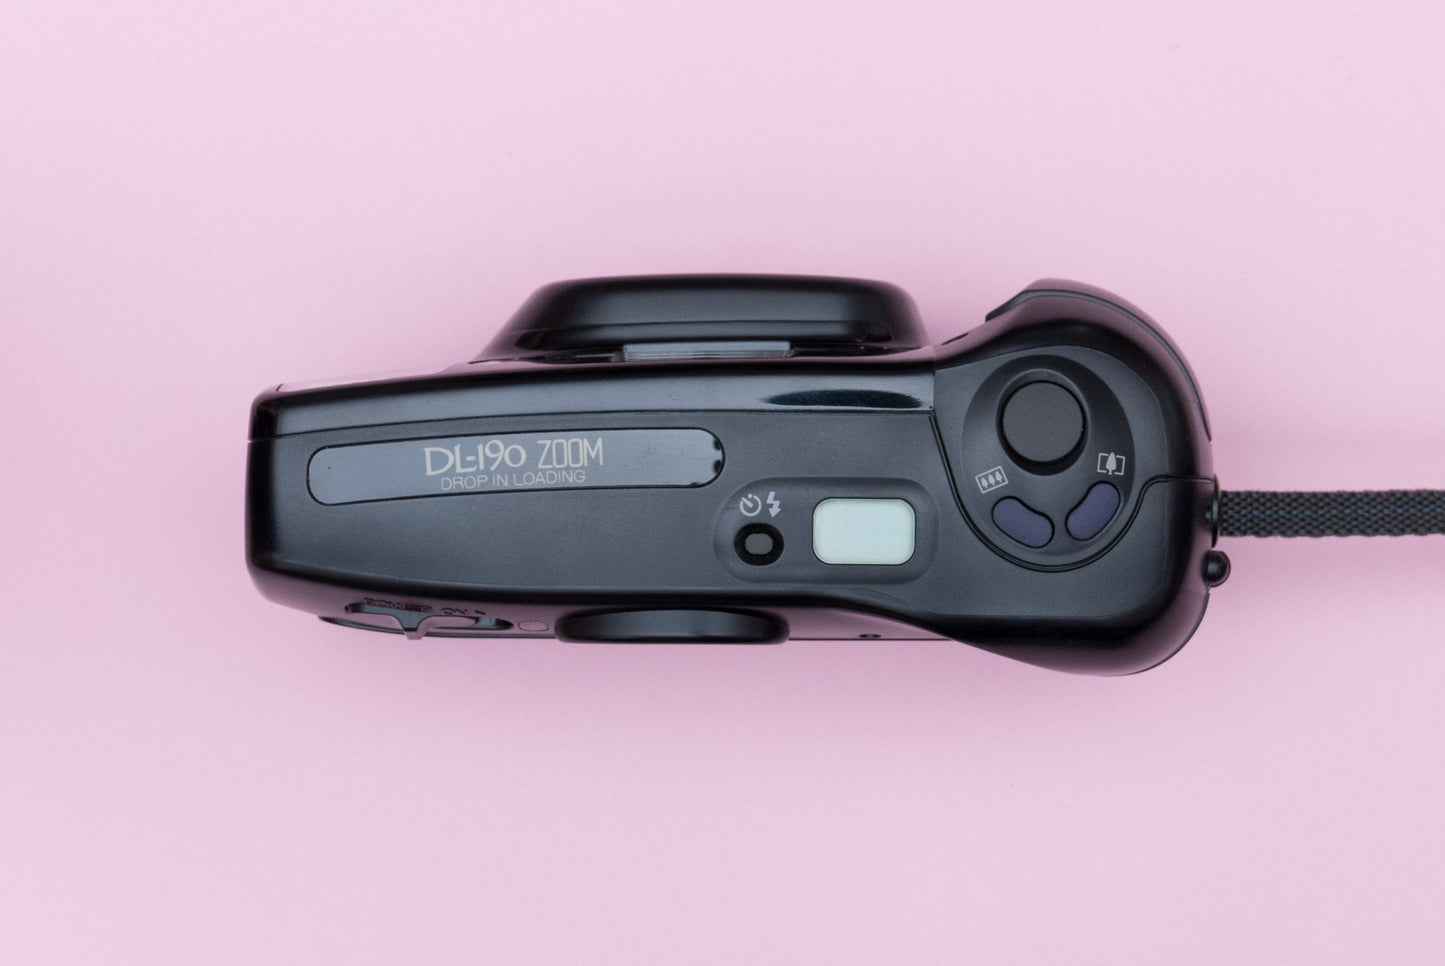 Fuji DL-190 Zoom Compact 35mm Film Camera